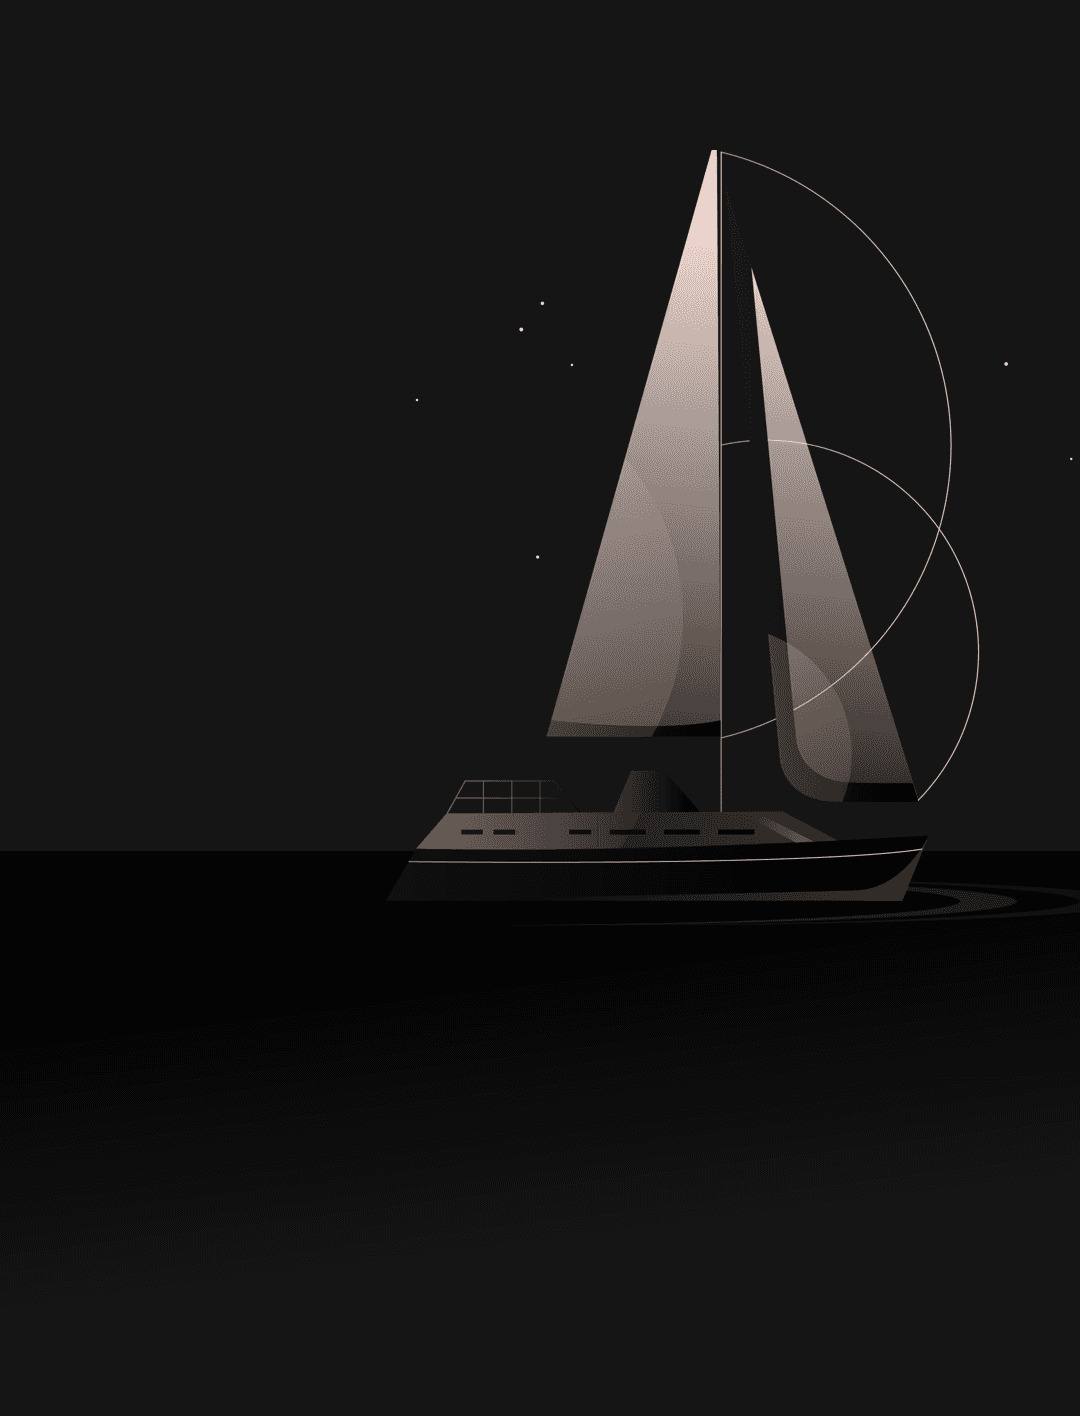 Illustratrion of a boat expressing excellence in digital design